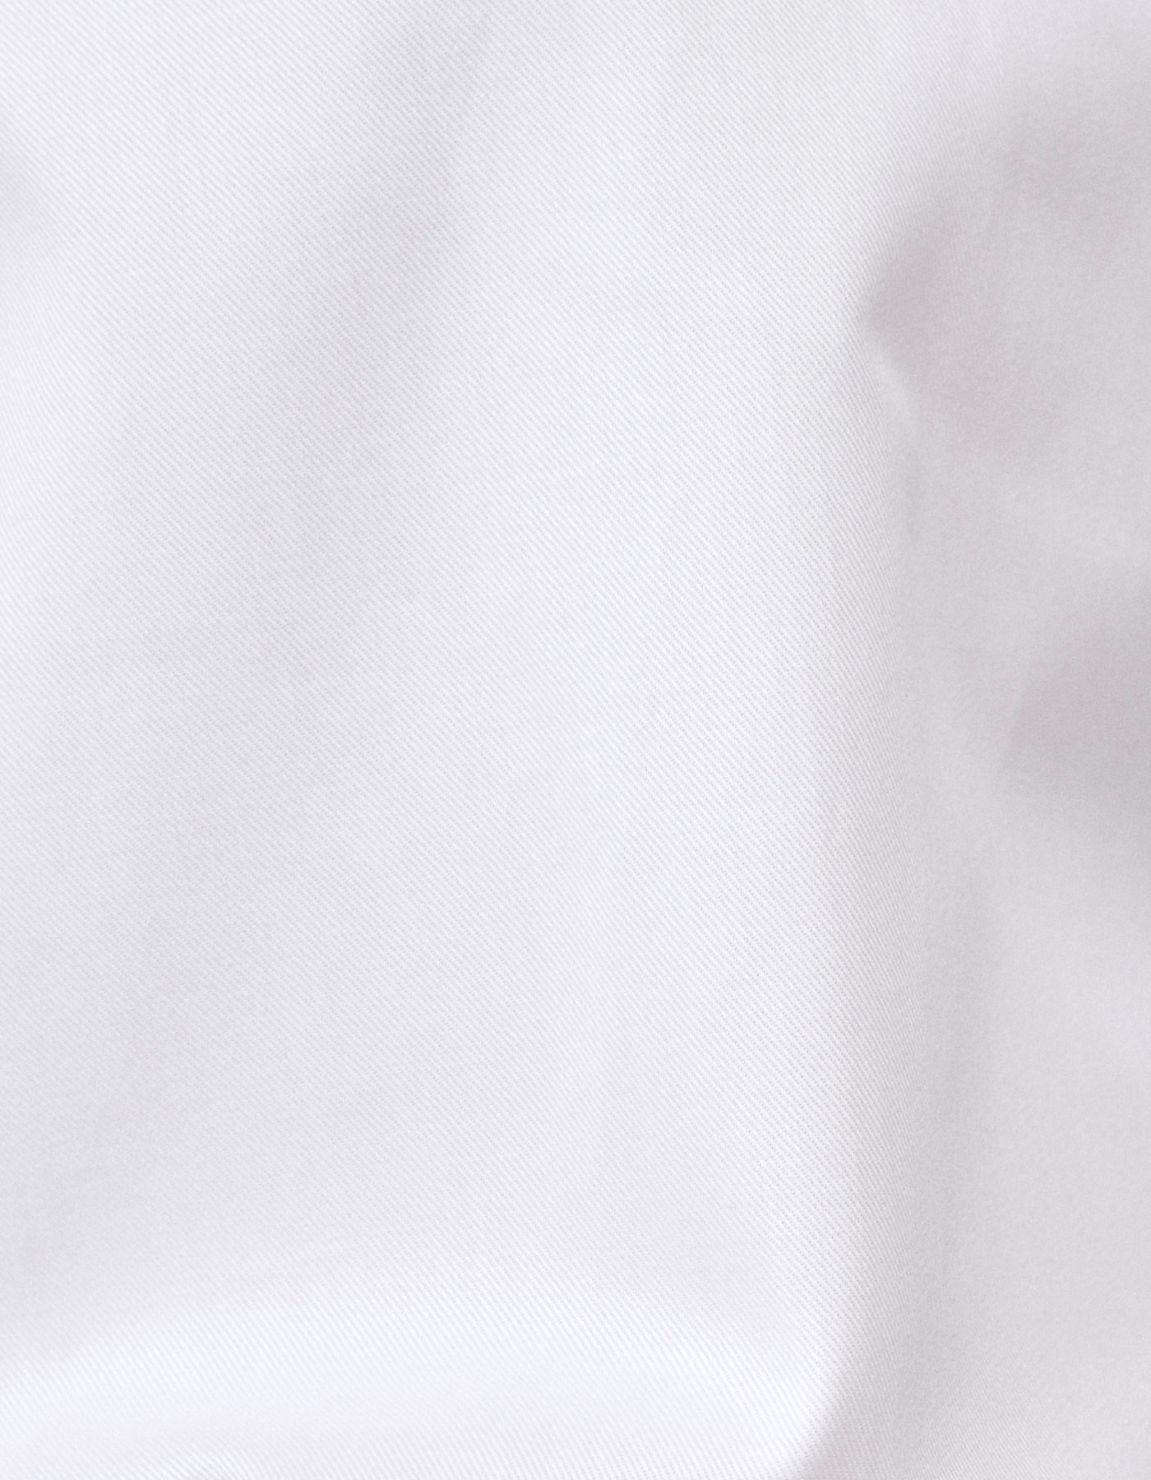 Shirt Collar small cutaway White Twill Evolution Classic Fit 2